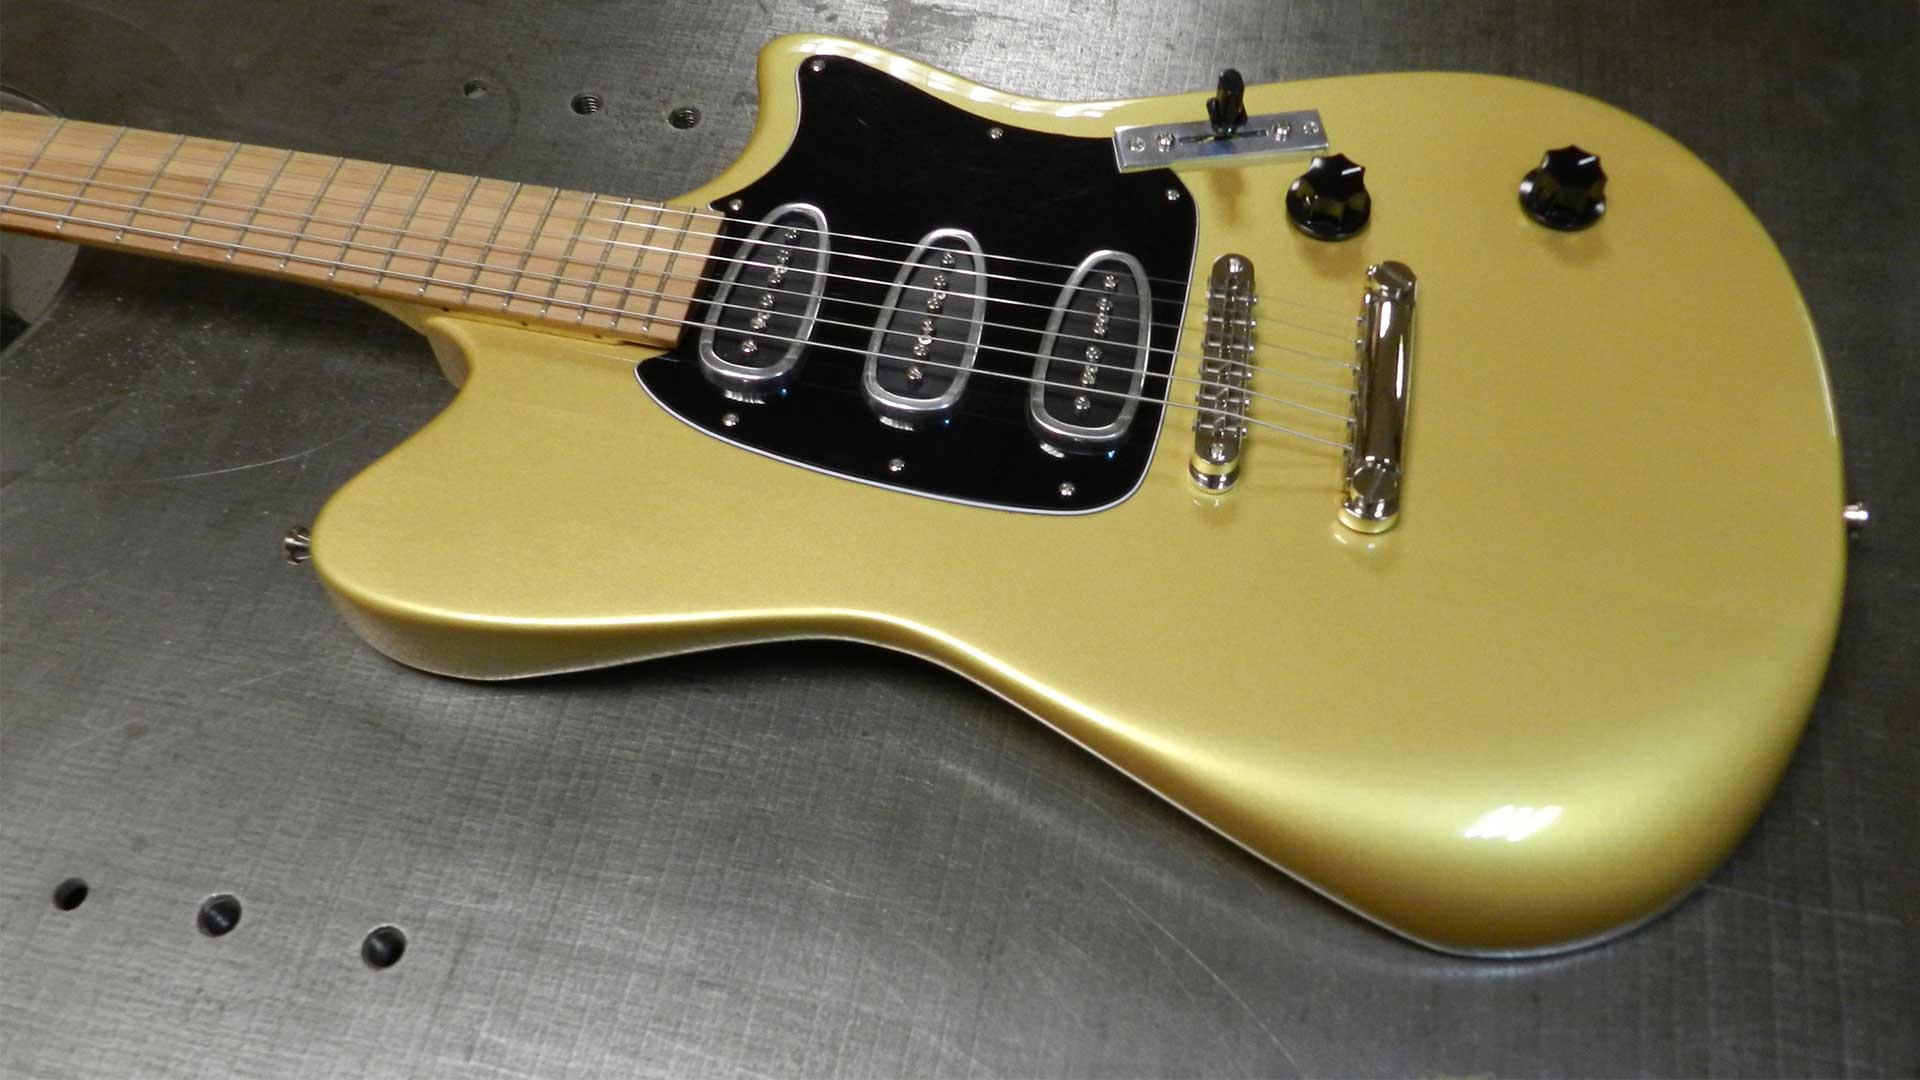 Roadrunner Guitars joined Luthiers.com